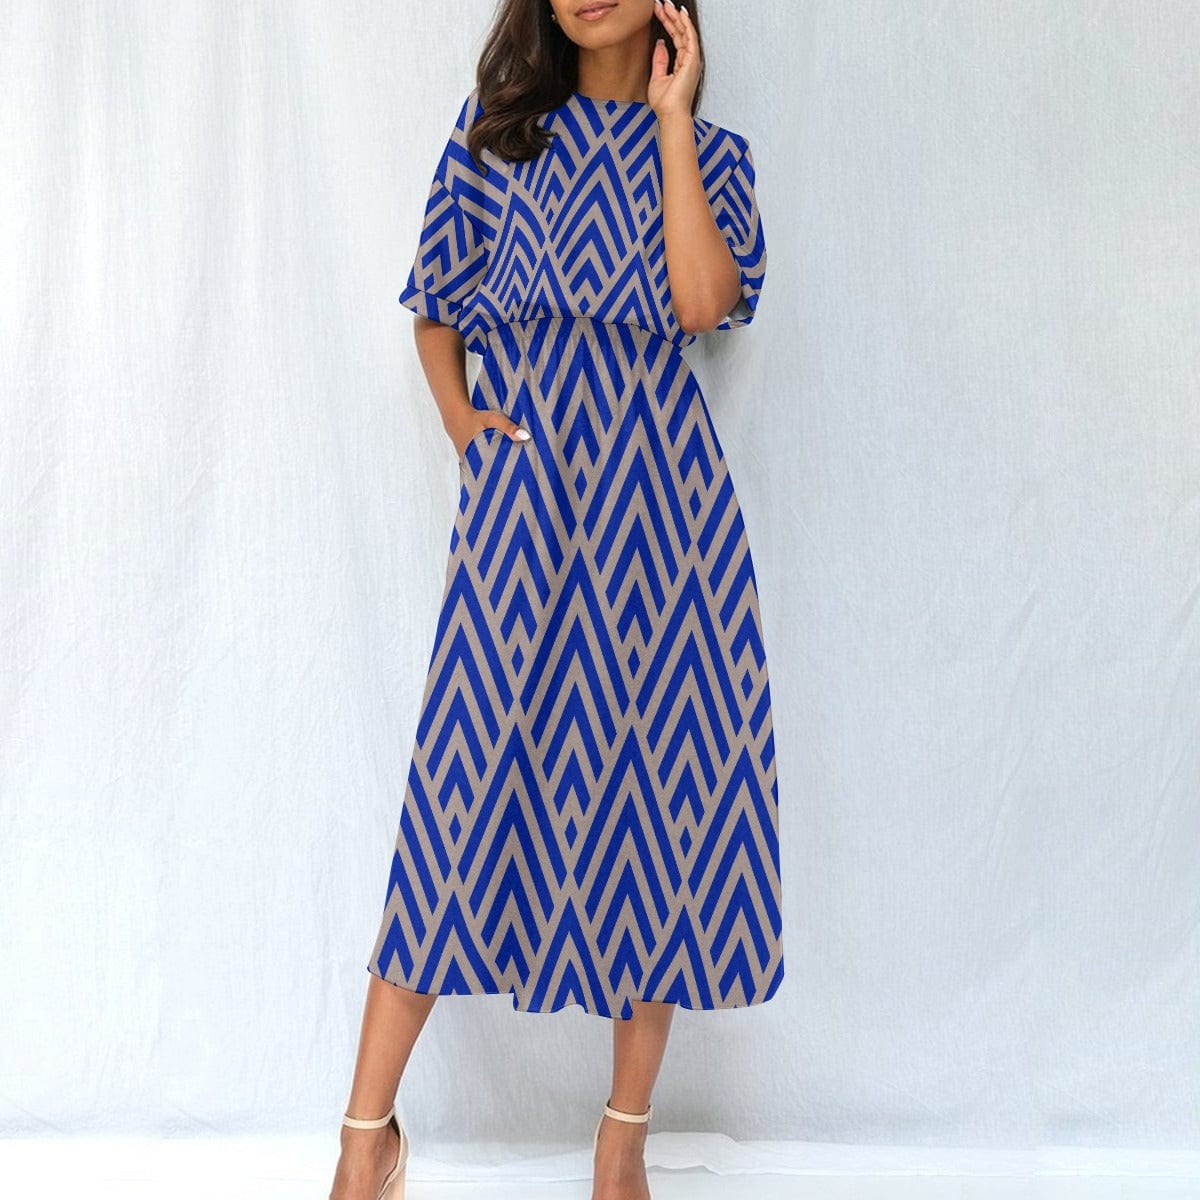 Yoycol Dresses Azul Azteca - All-Over Print Women's Elastic Waist Dress